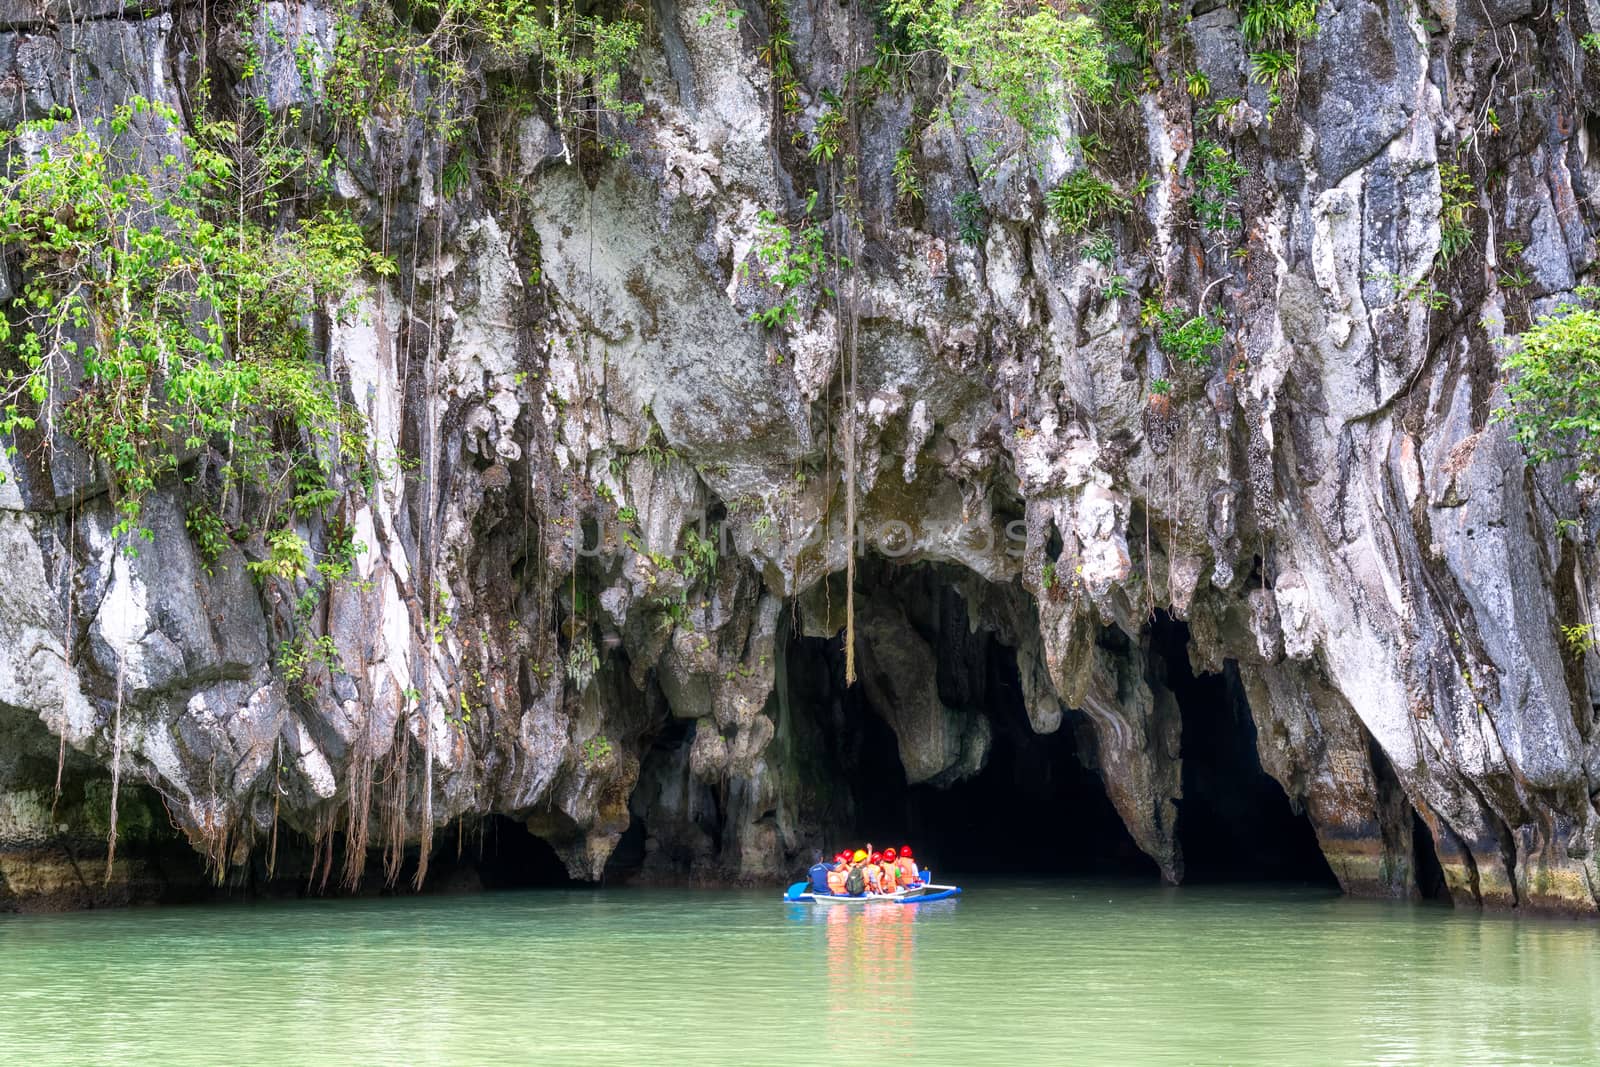 Puerto Princesa Subterranean River National Park, Palawan - Philippines by fazon1